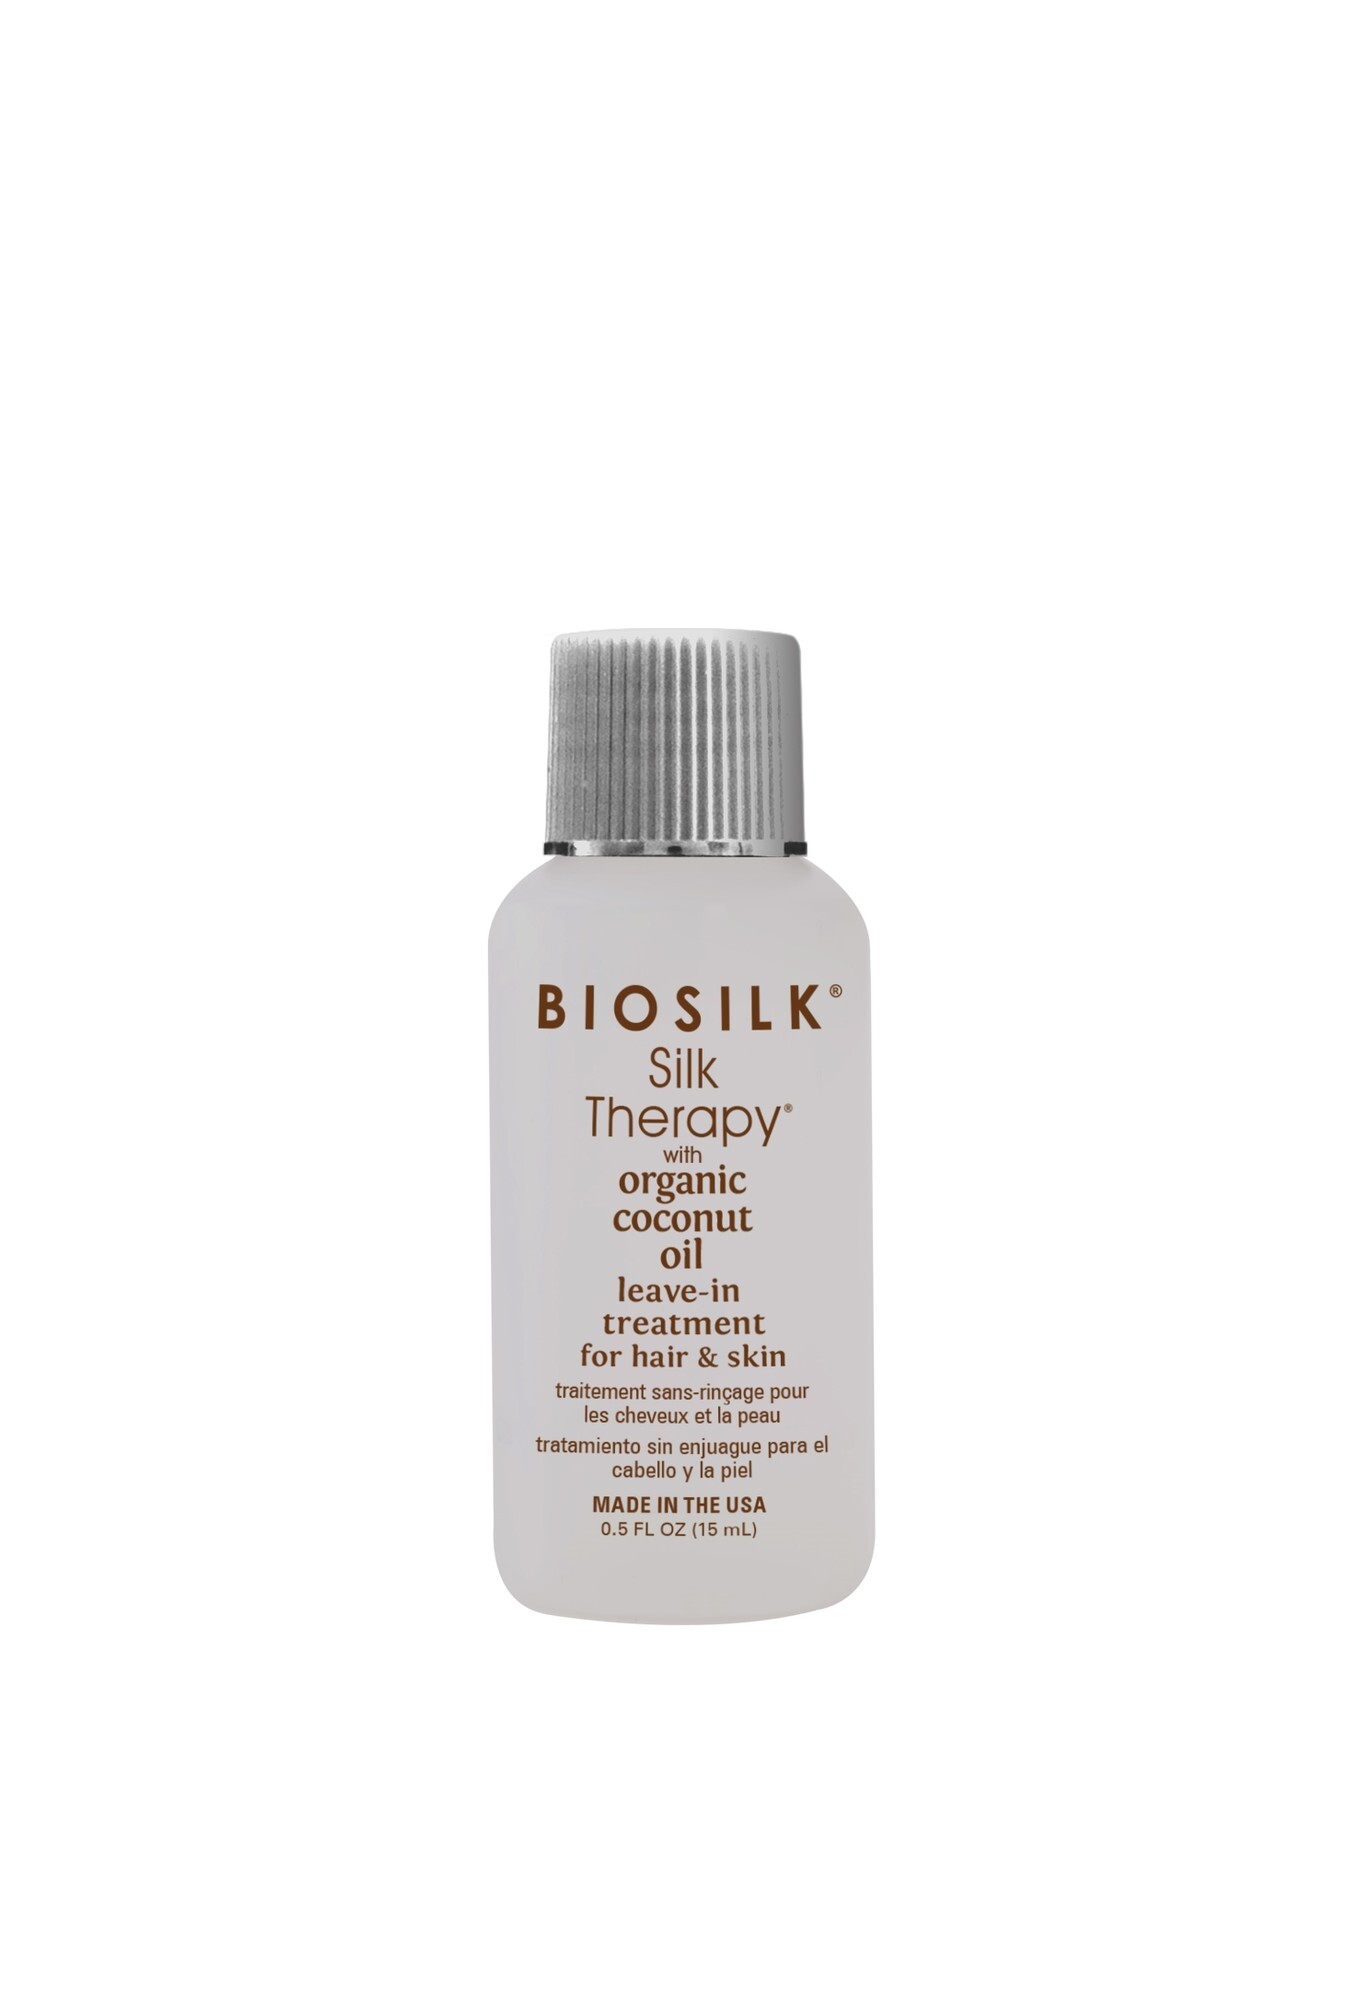 Biosilk Silk Therapy with Coconut Oil Leave in Treatment 15 ml